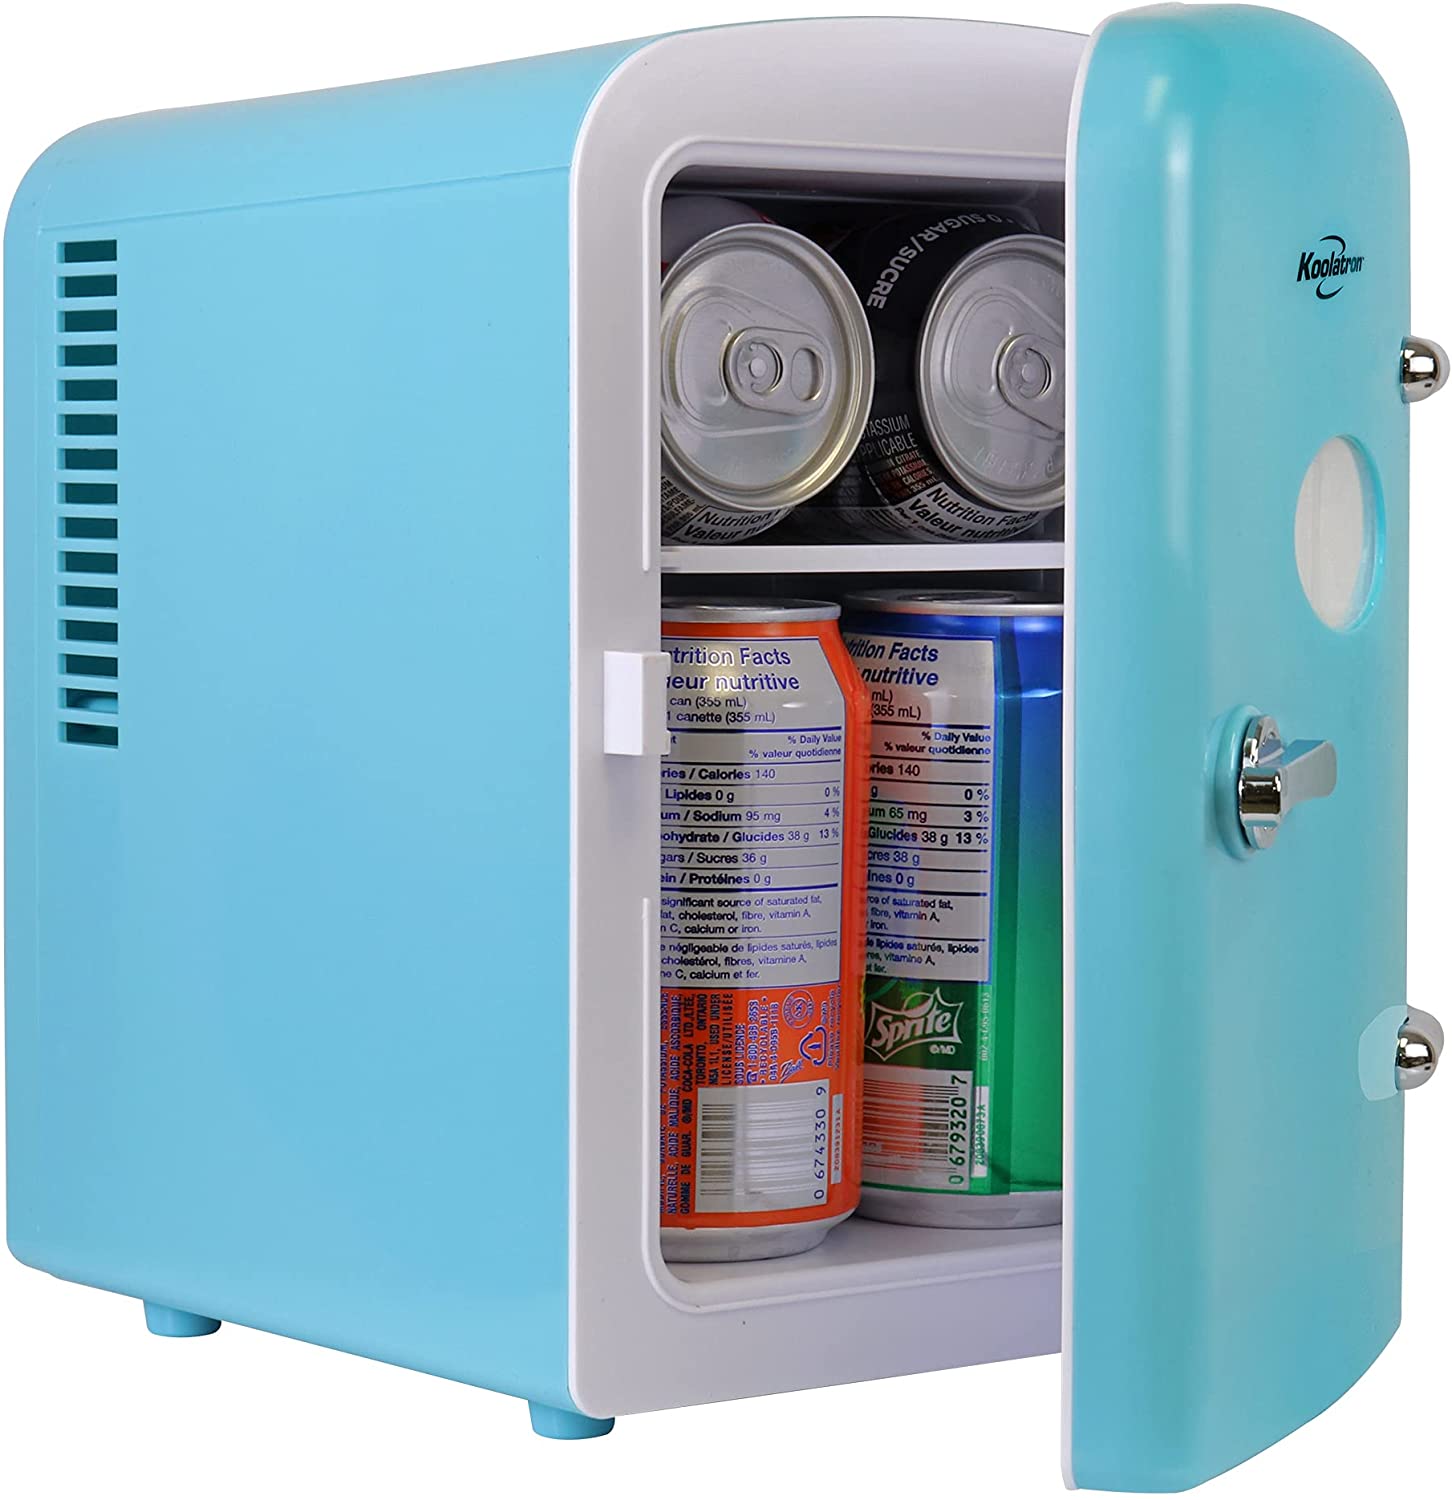 YITAMOTOR Blue Mini Fridge for Bedroom 20L Portable Refrigerator Double Doors Refrigerators Digital Temperature Control Dorm Room Beer Drinks Cooler 